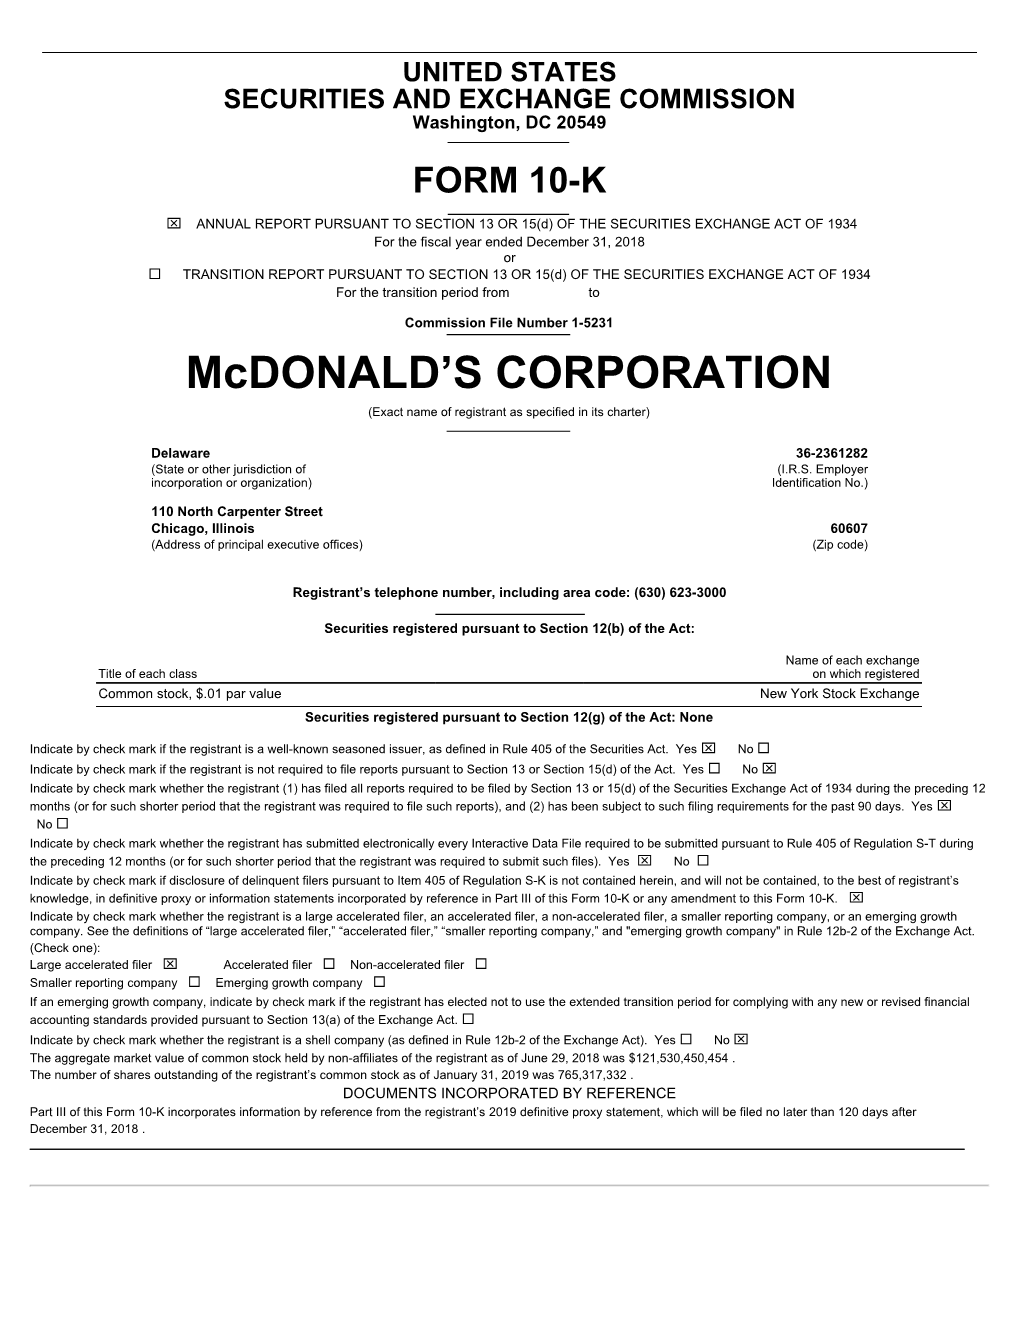 Form 10-K of Mcdonald's Corporation